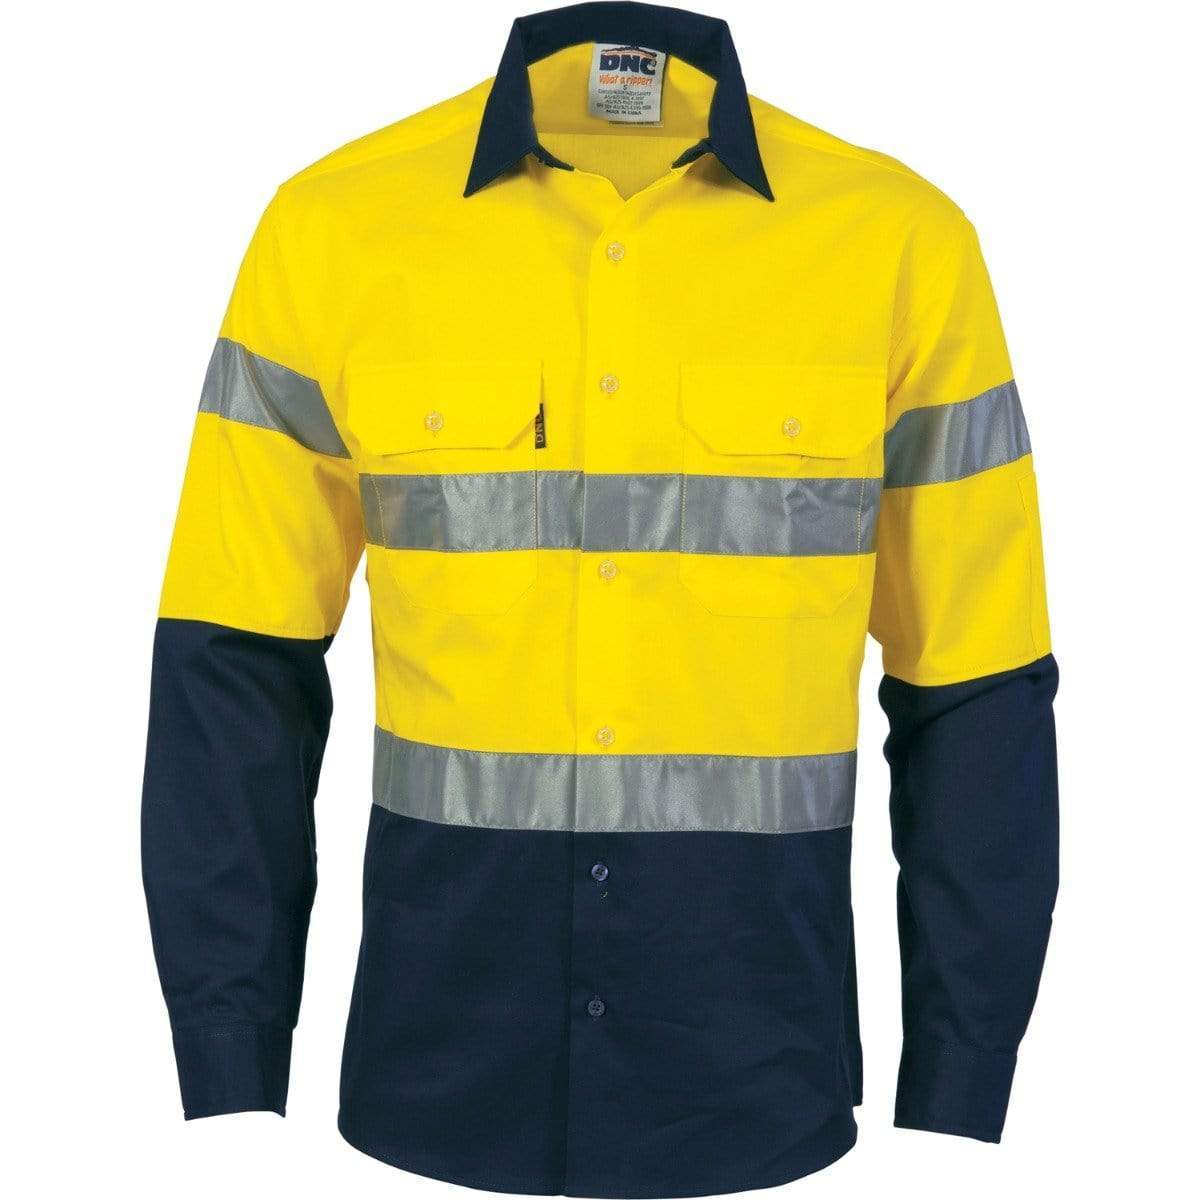 DNC Workwear Work Wear Yellow/Navy / XS DNC WORKWEAR Hi-Vis Cool-Breeze Long Sleeve Cotton Shirt with Generic Reflective Tape 3966